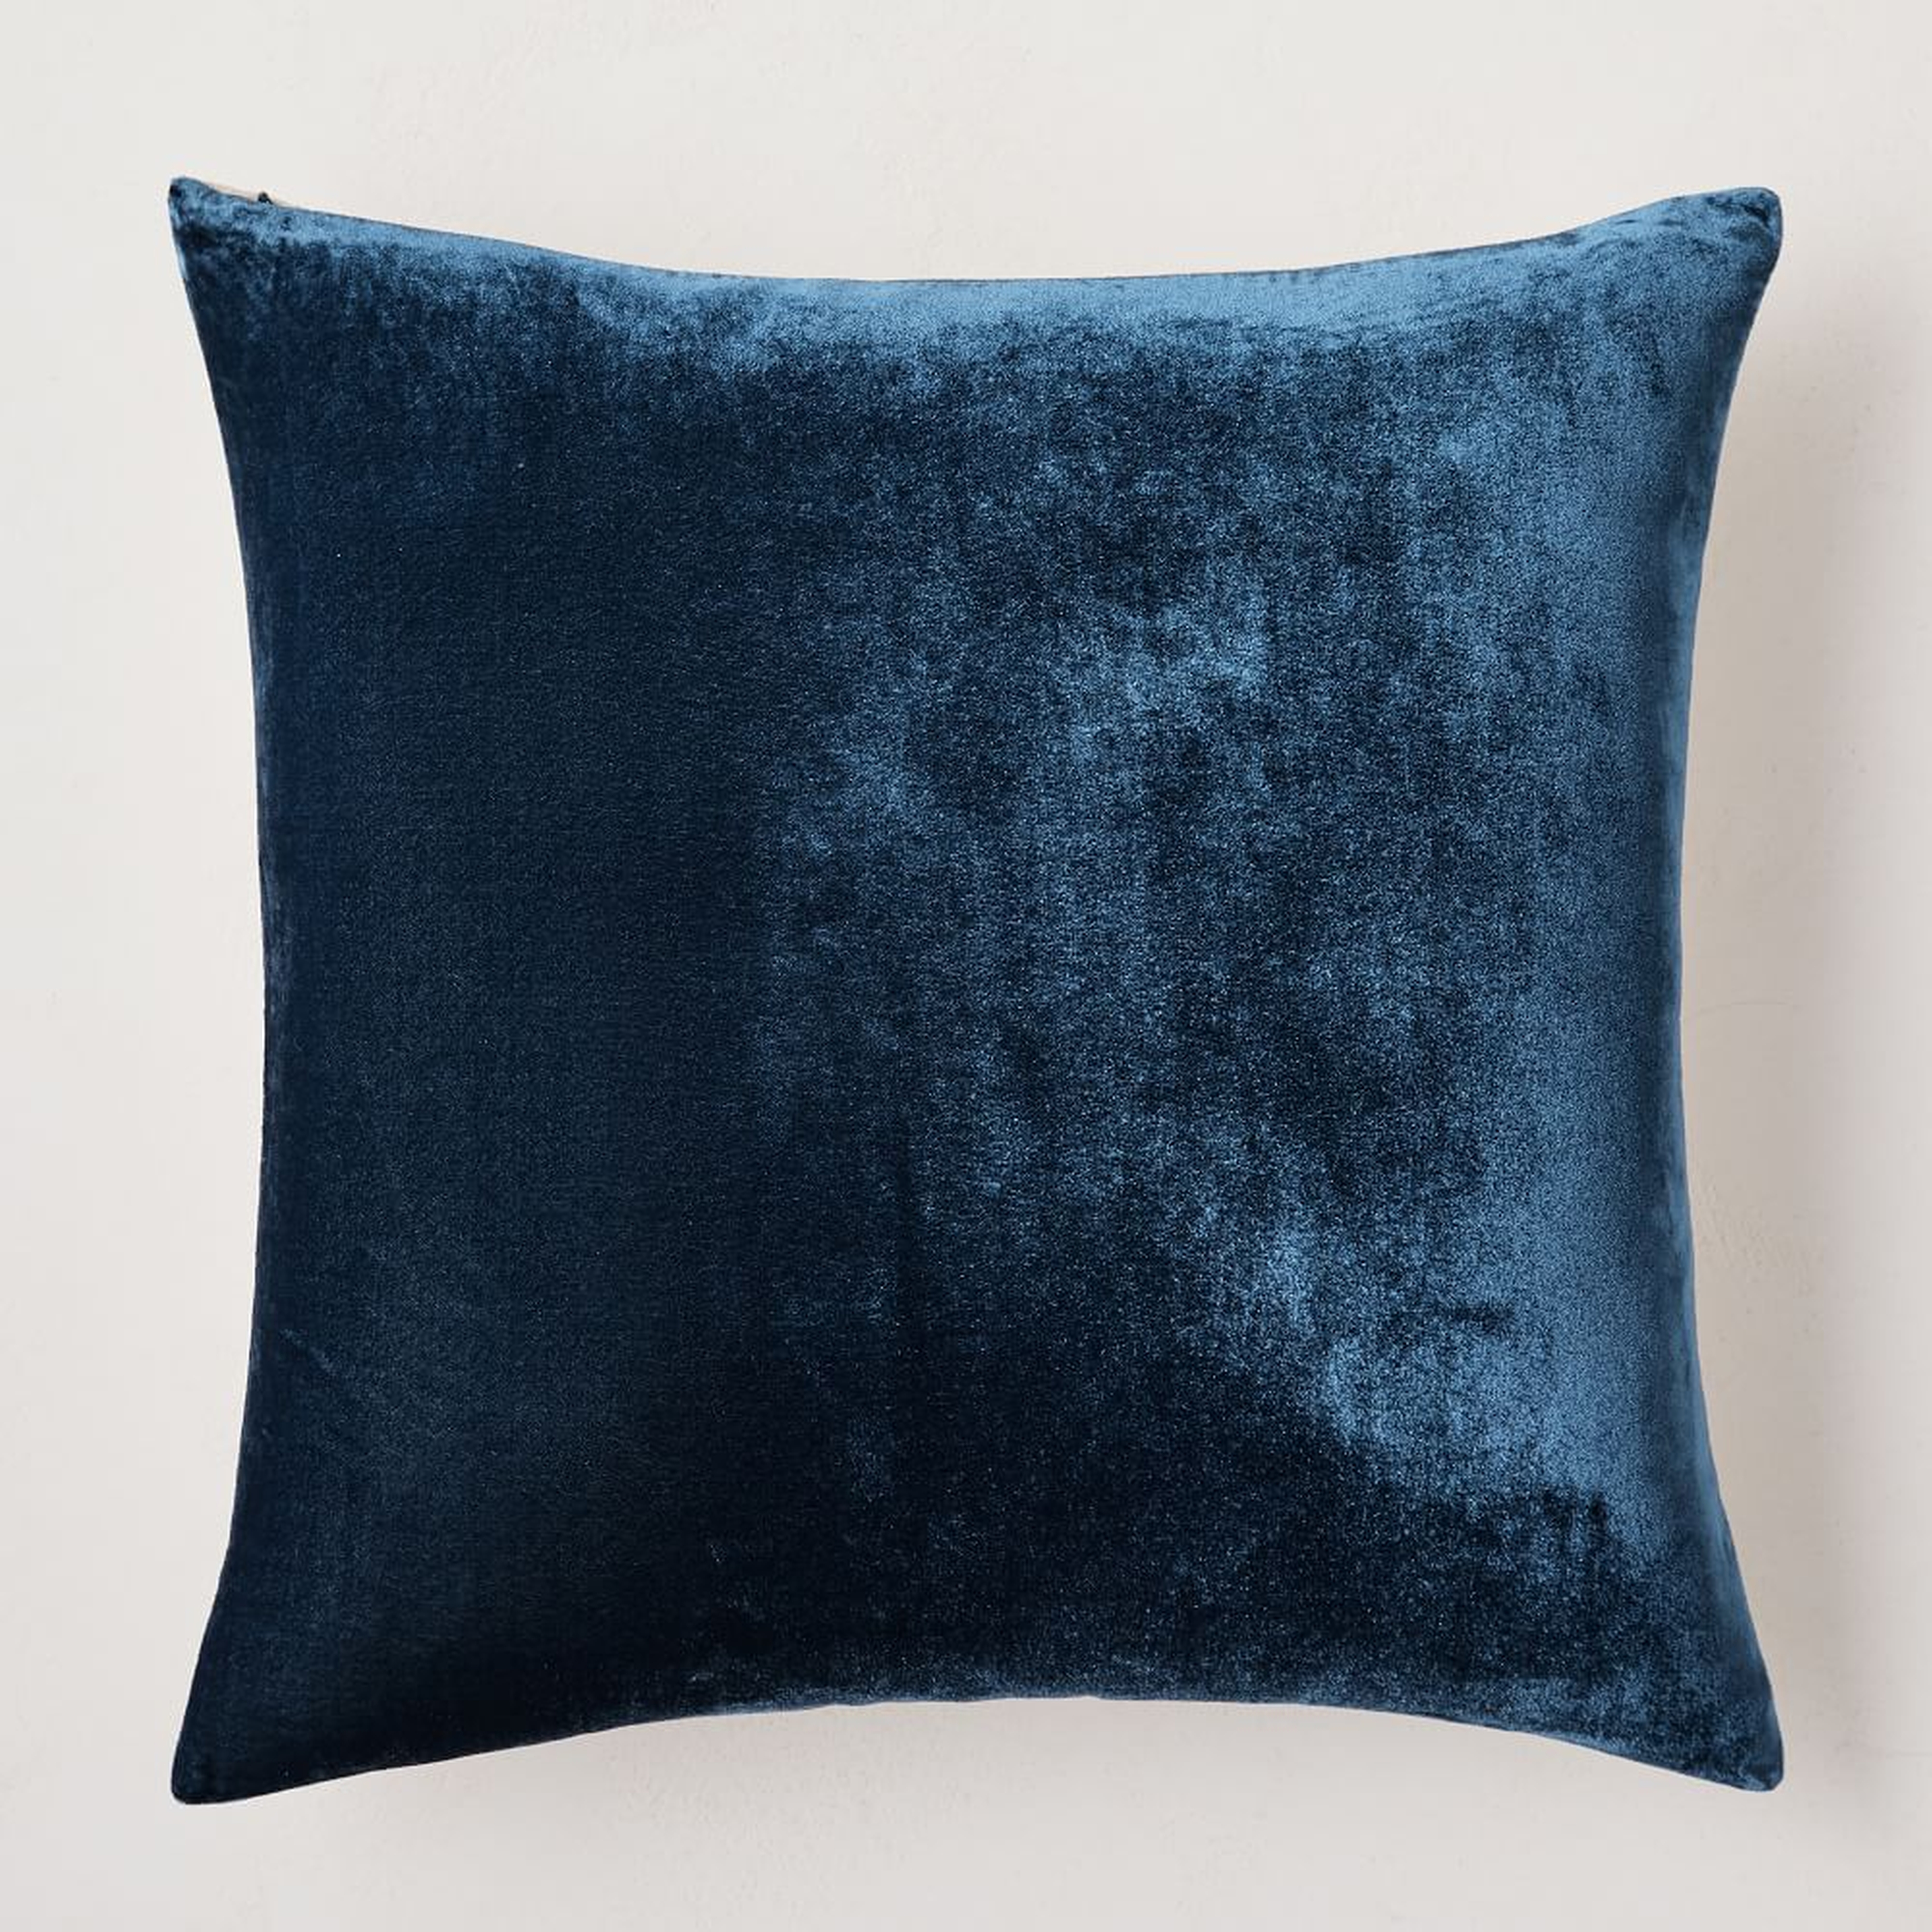 Lush Velvet Pillow Cover, 20"x20", Regal Blue - West Elm